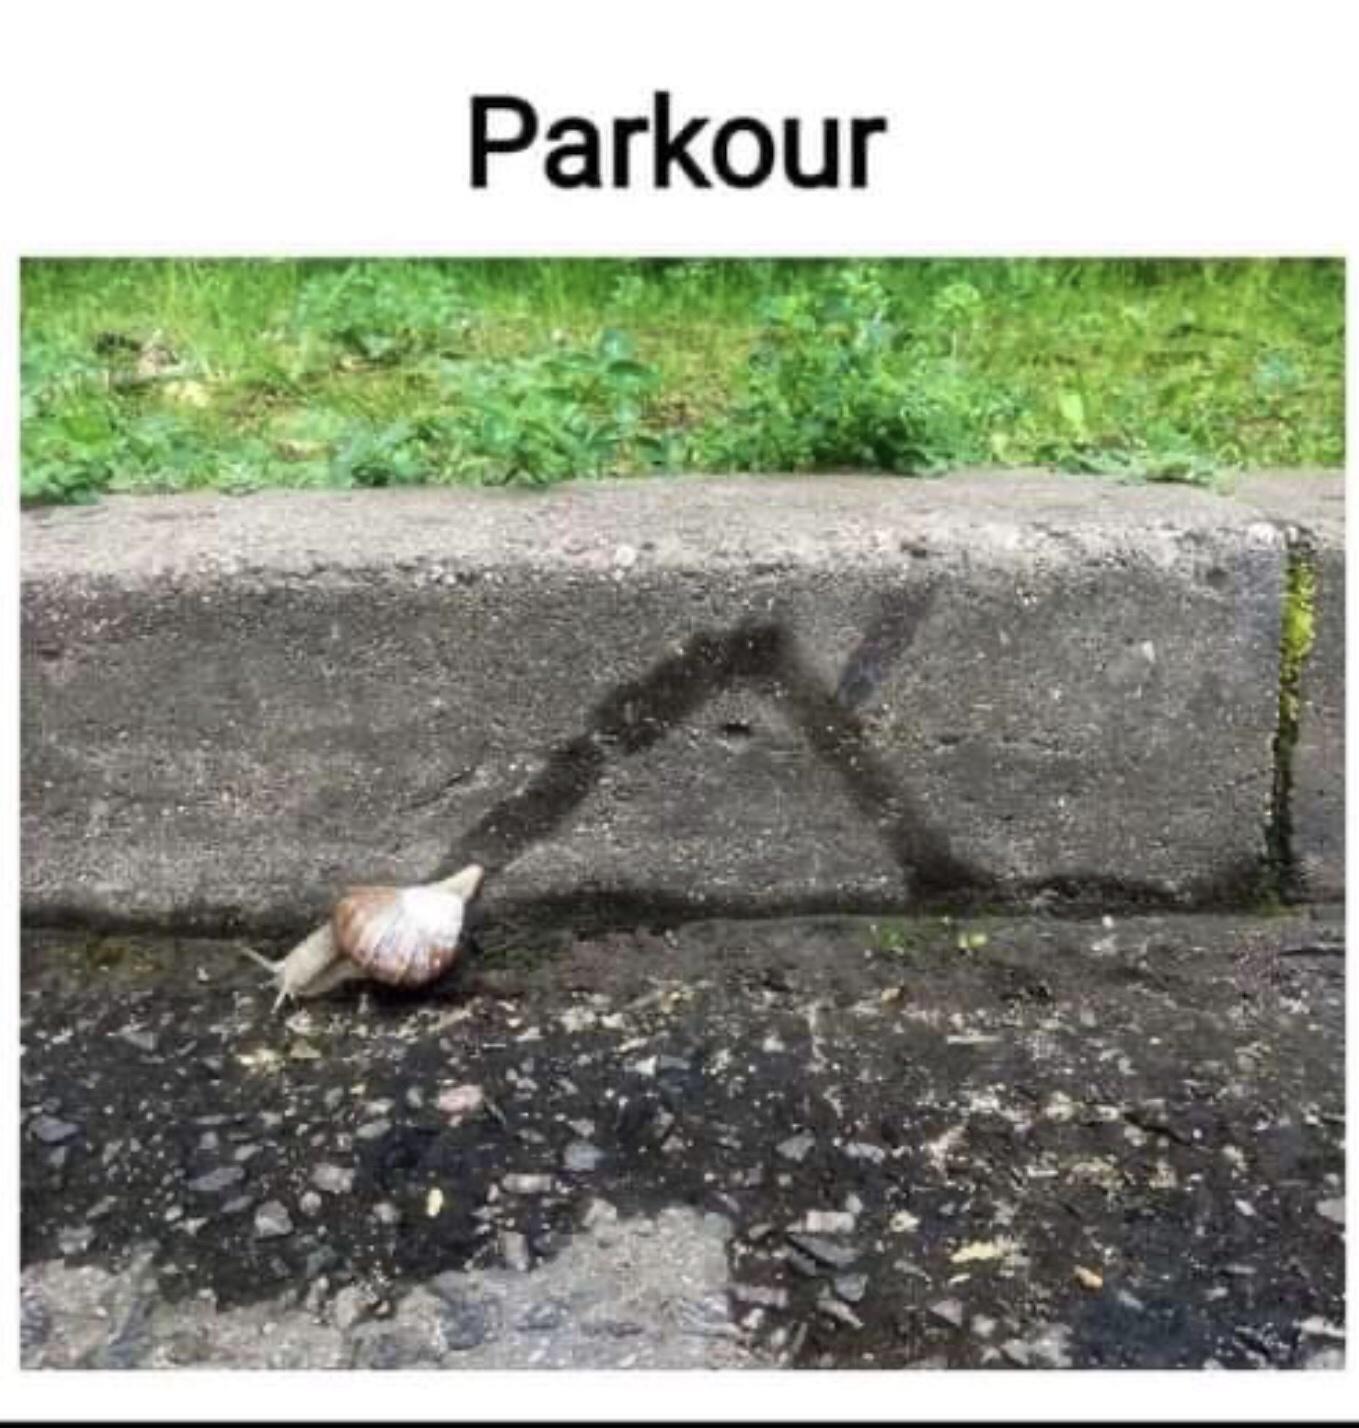 snail-parkour-54191.jpeg